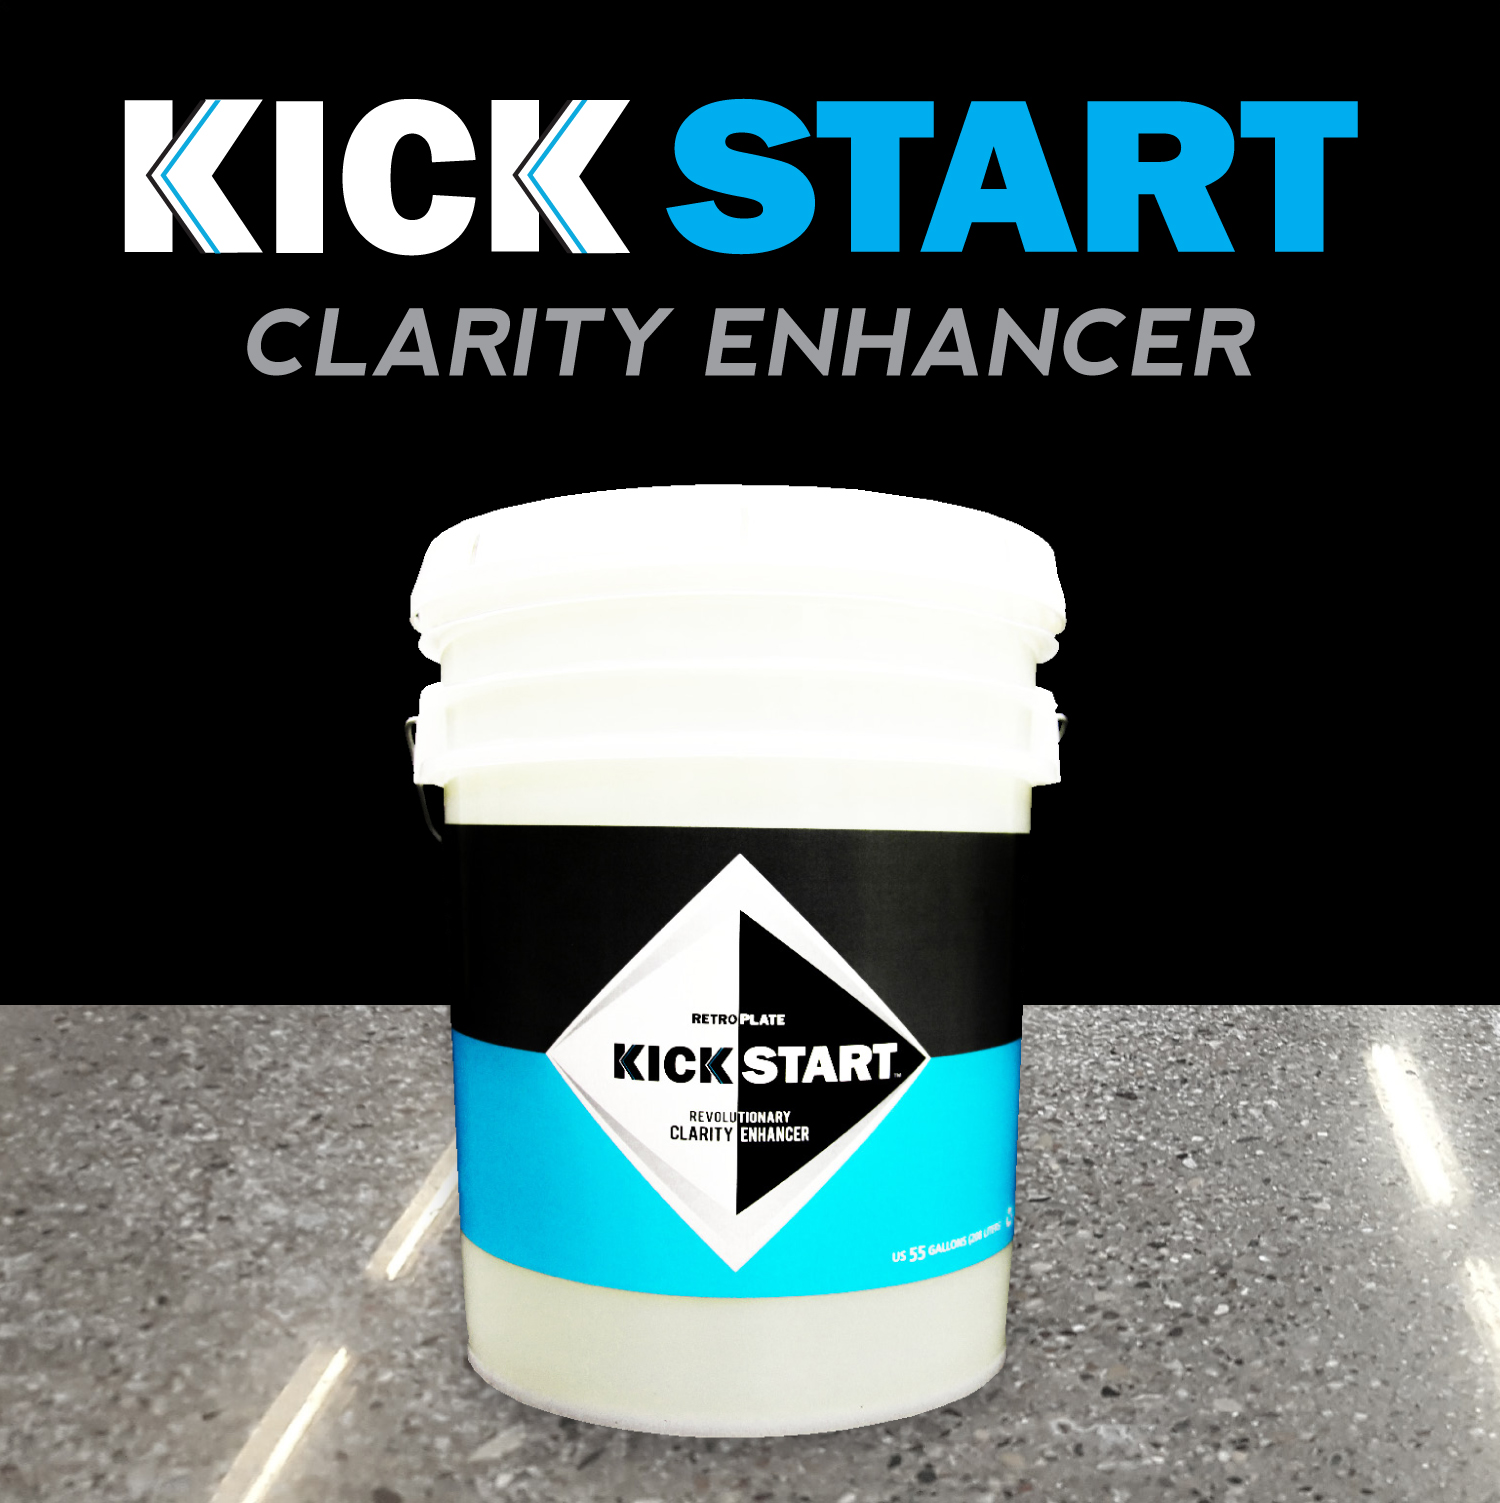 Kickstart clarity enhancer flyer.